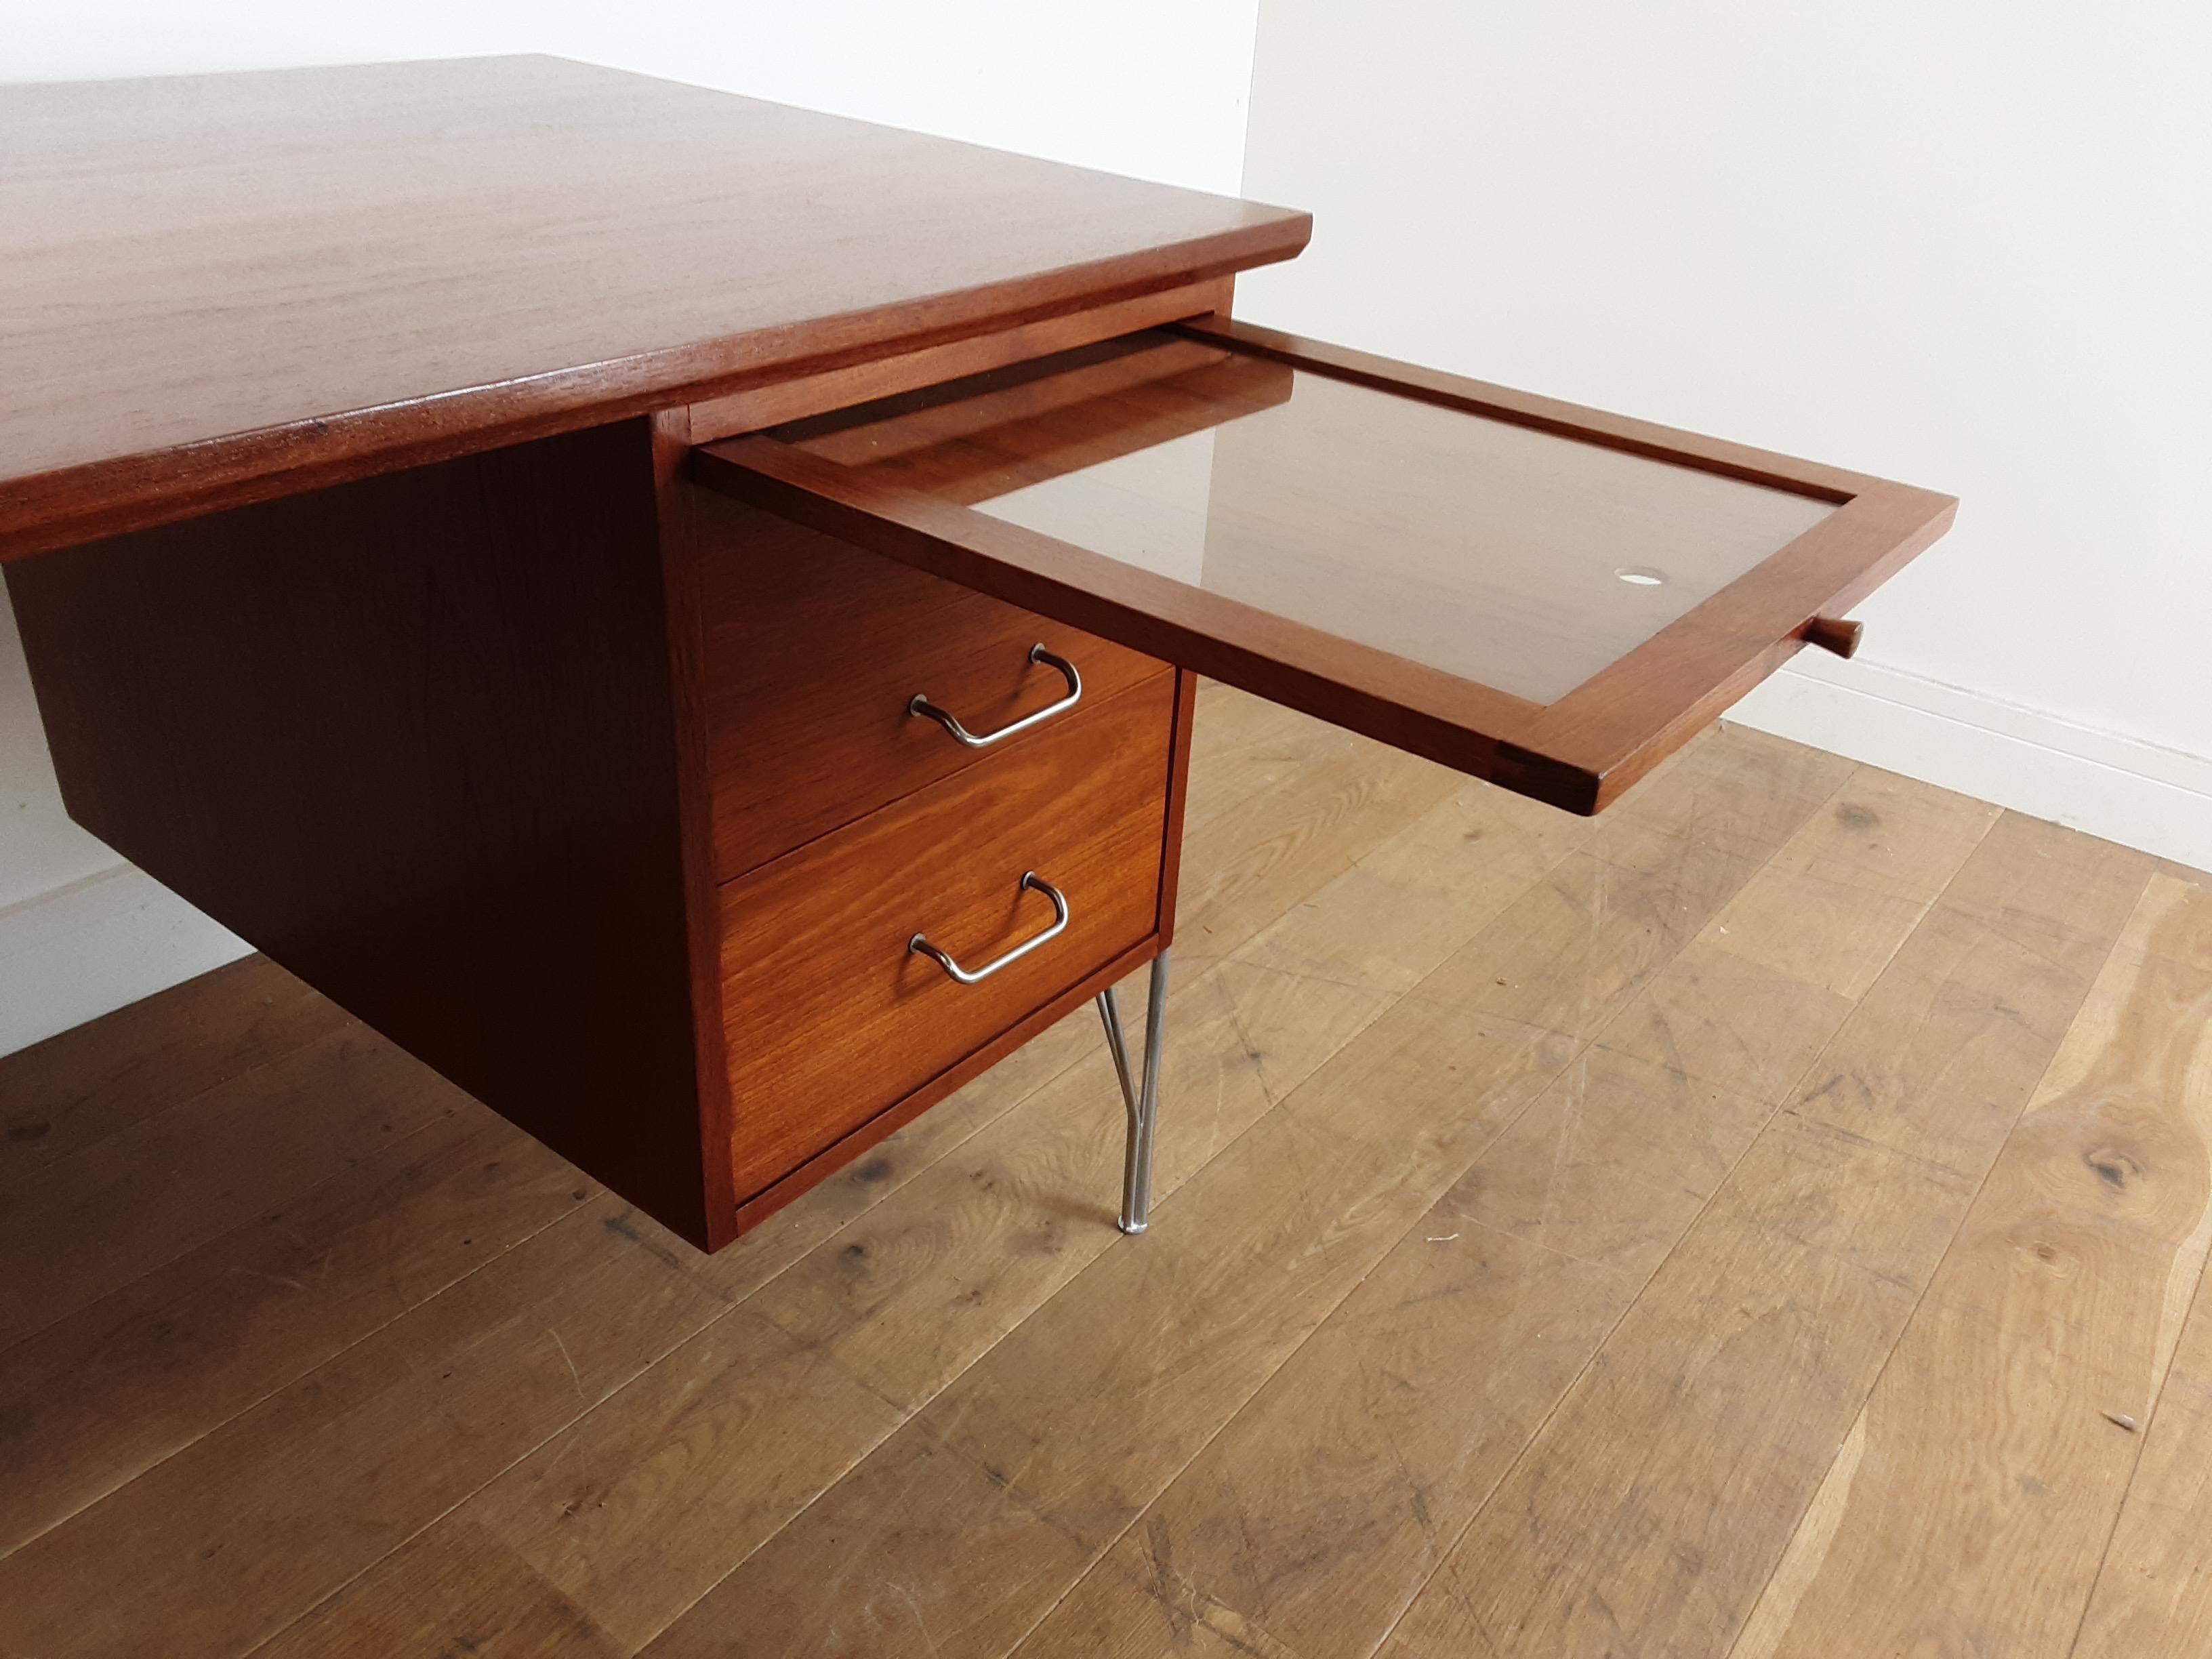 British Midcentury Teak Desk Designed by John and Sylvia Reid for Stag Furniture For Sale 5